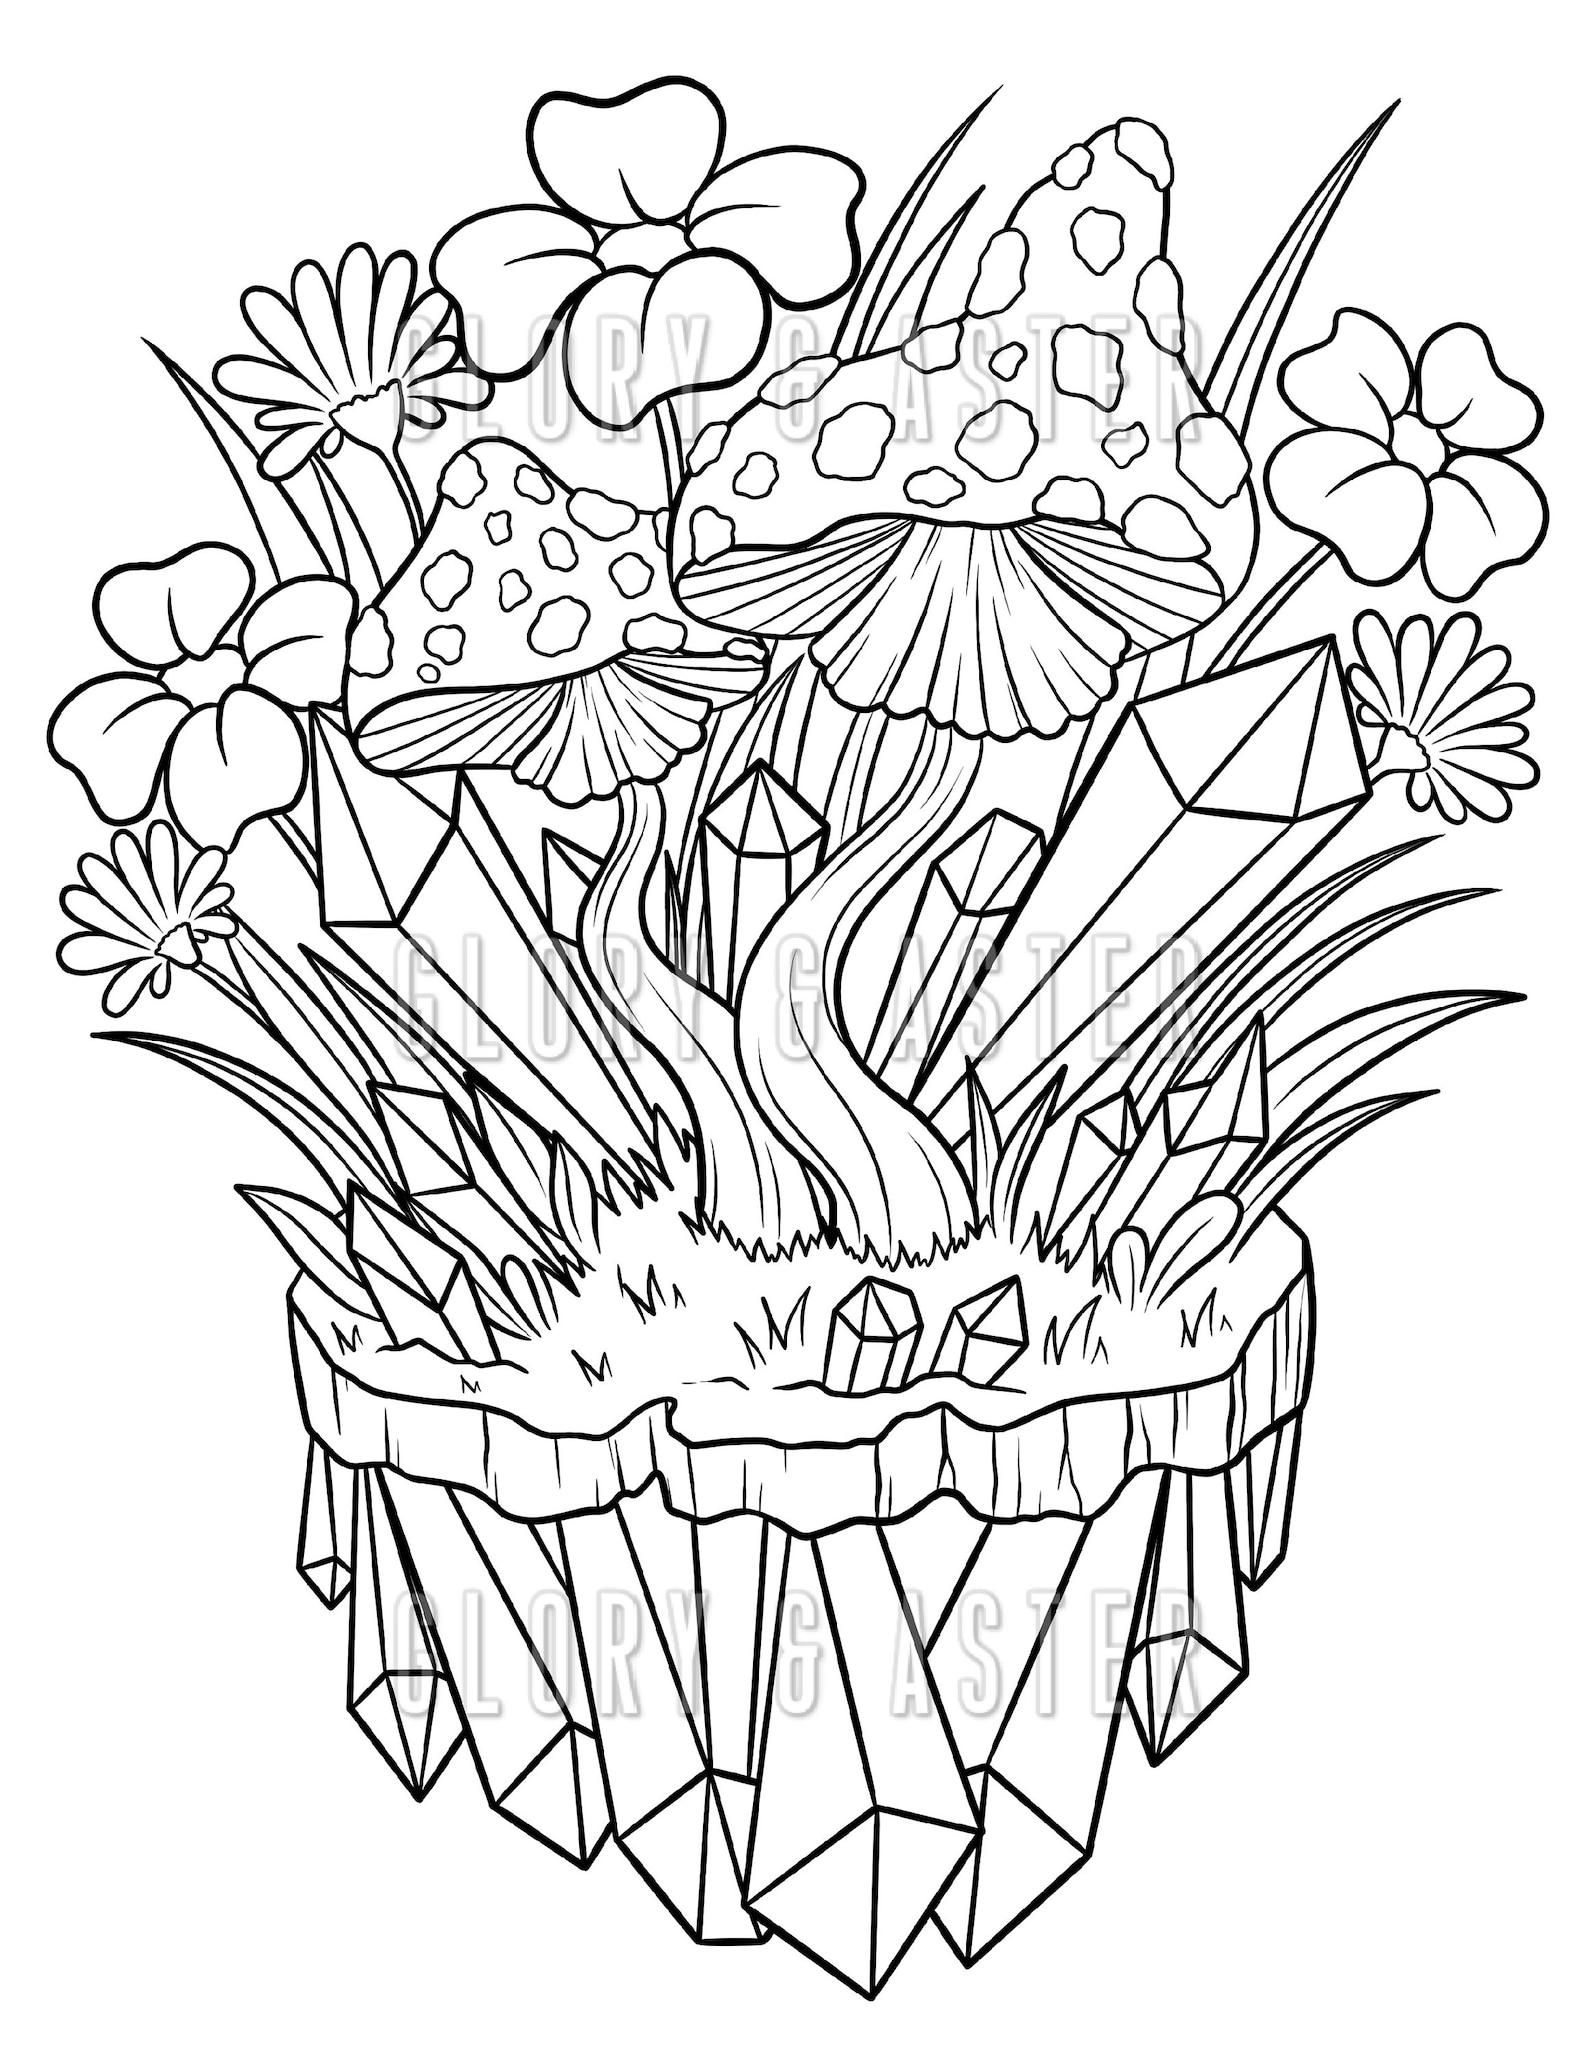 Kawaii Mushroom Coloring Page Printable Coloring Page For Etsy ...